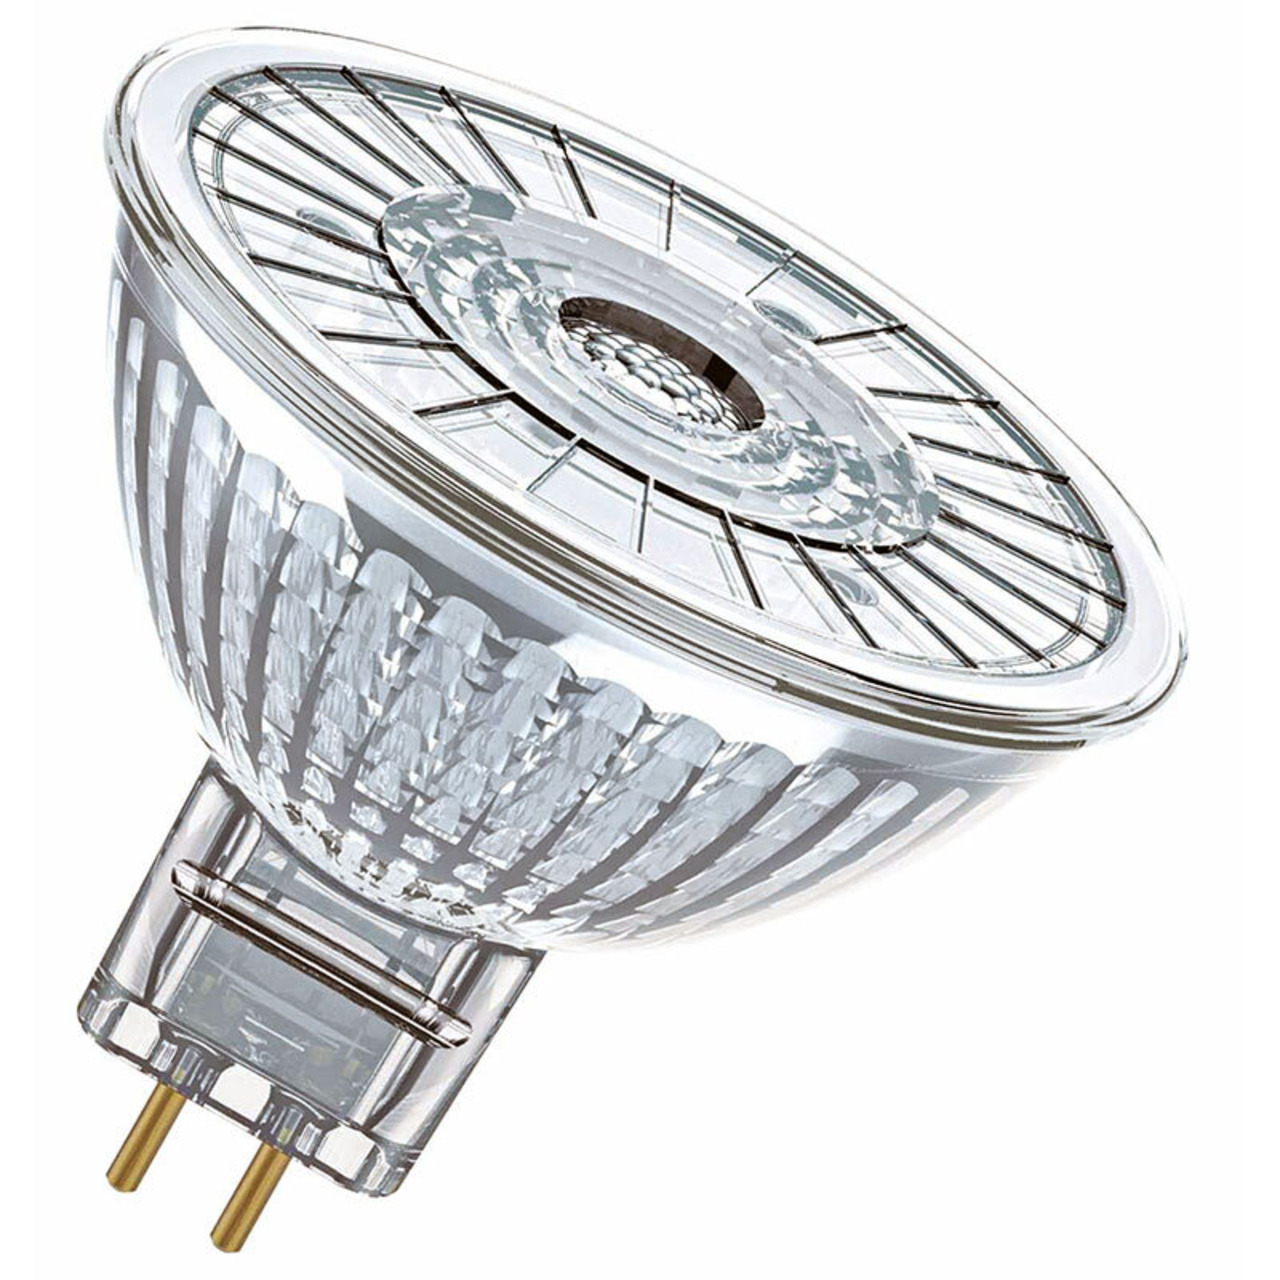 OSRAM LED SUPERSTAR 3-4-W-GU5-3-LED-Lampe- warmweiss- dimmbar- 12 V